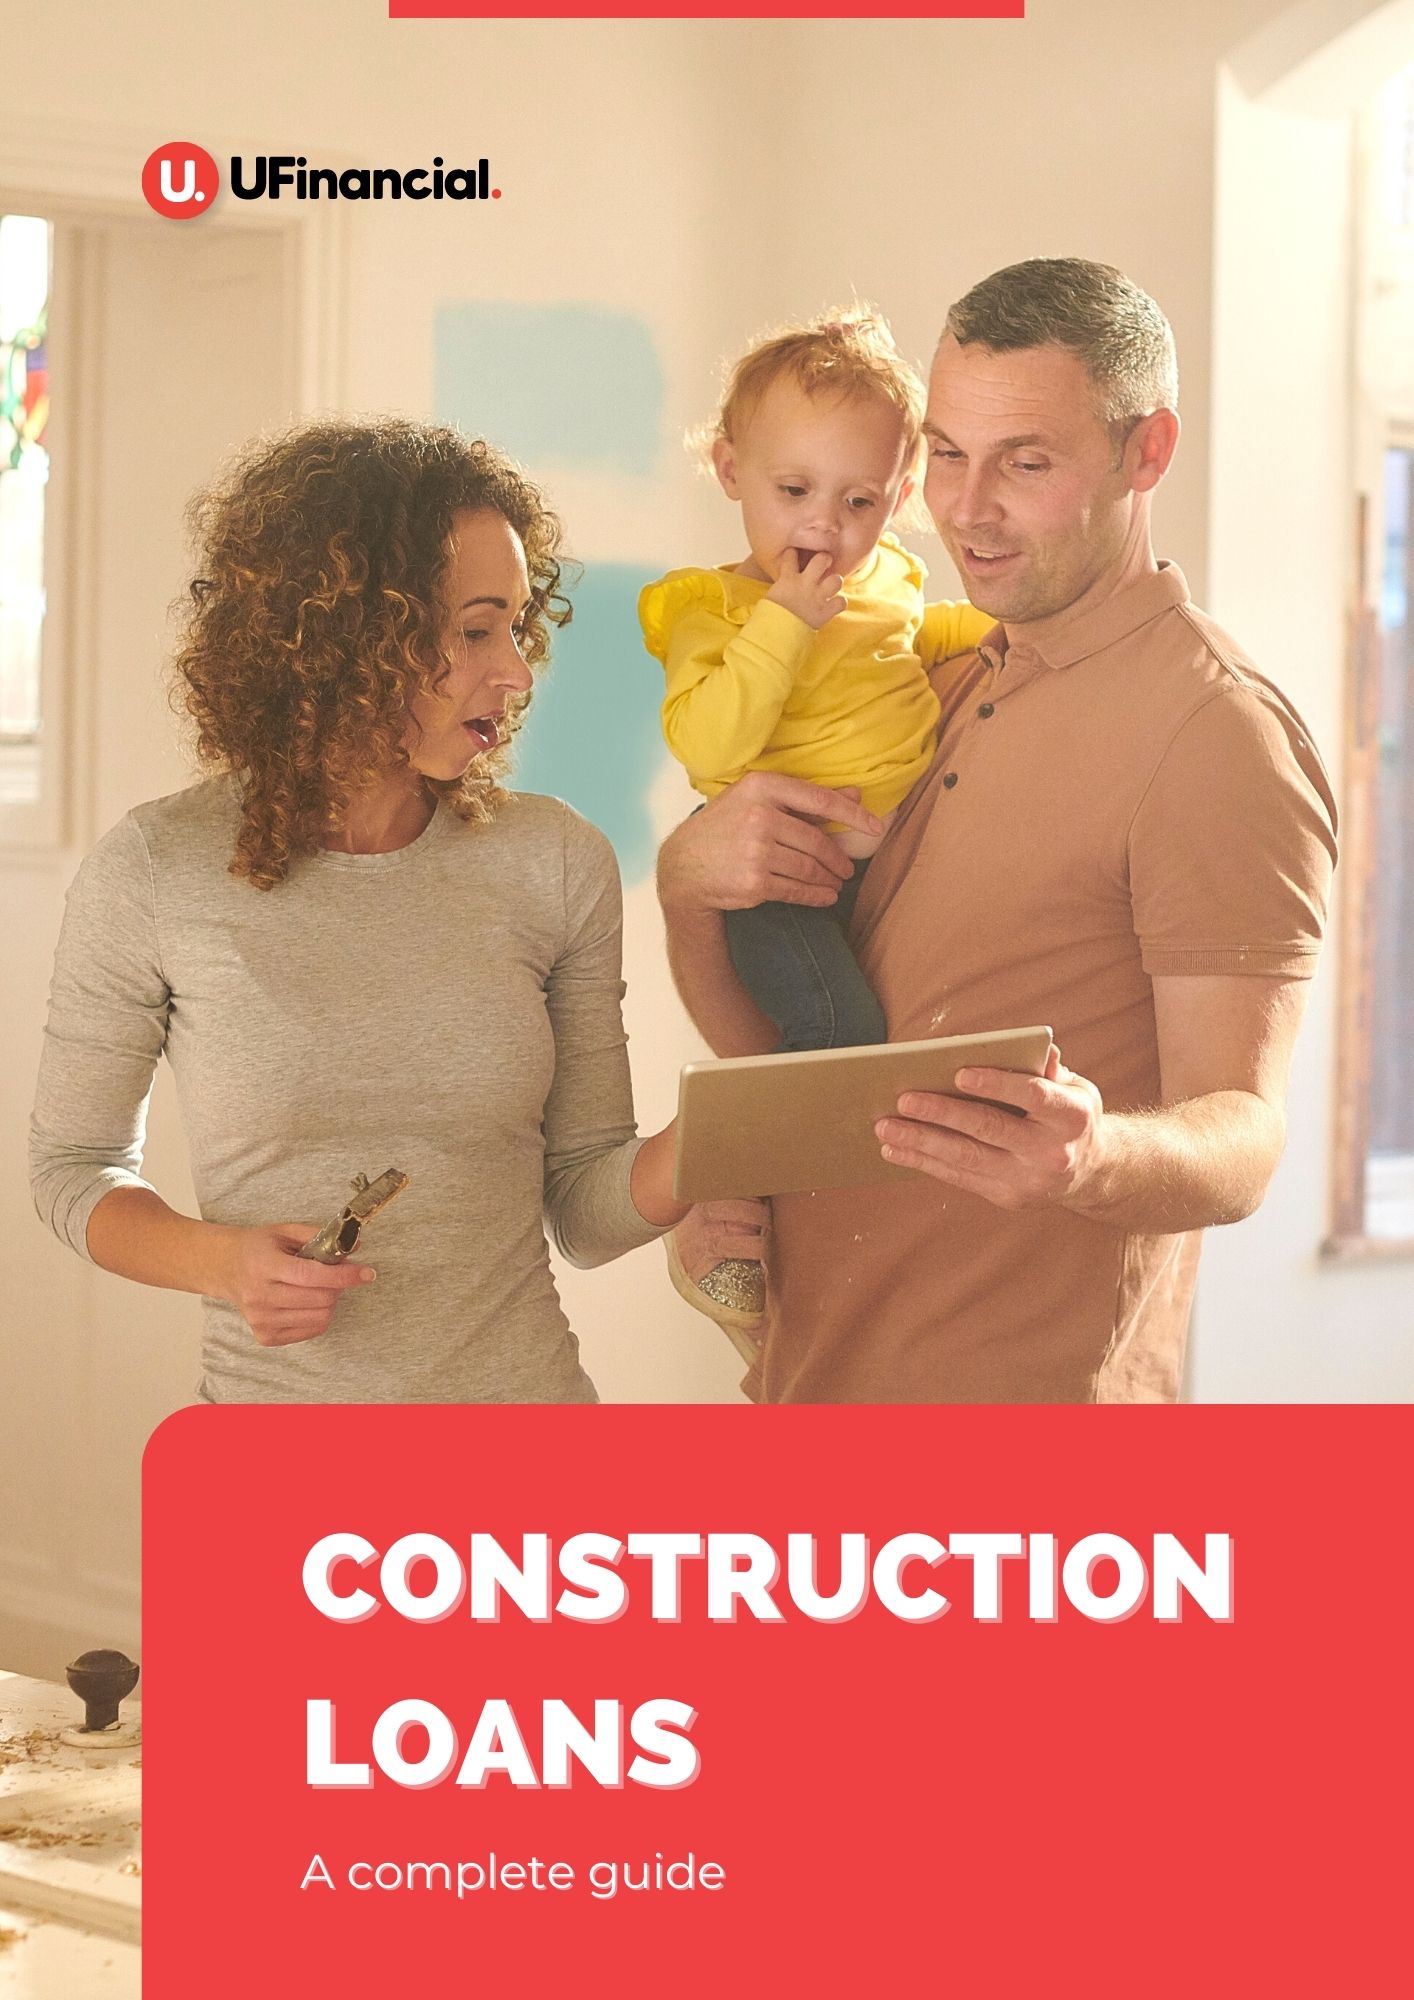 Construction loans guide